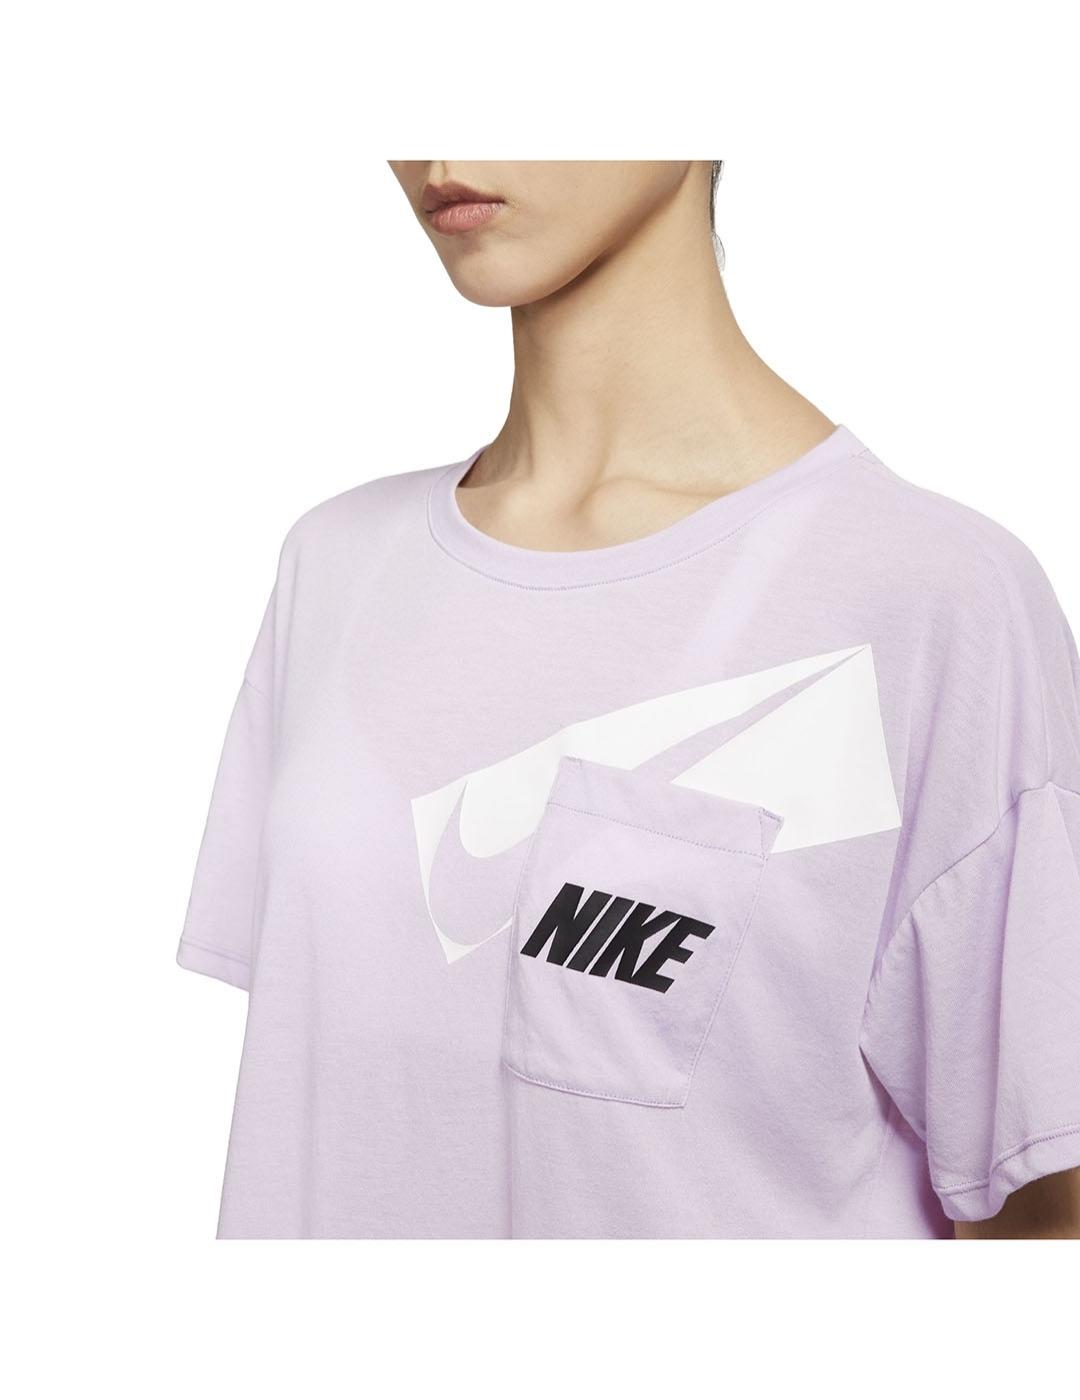 Camiseta Mujer Nike Dry Grx Crop Lila